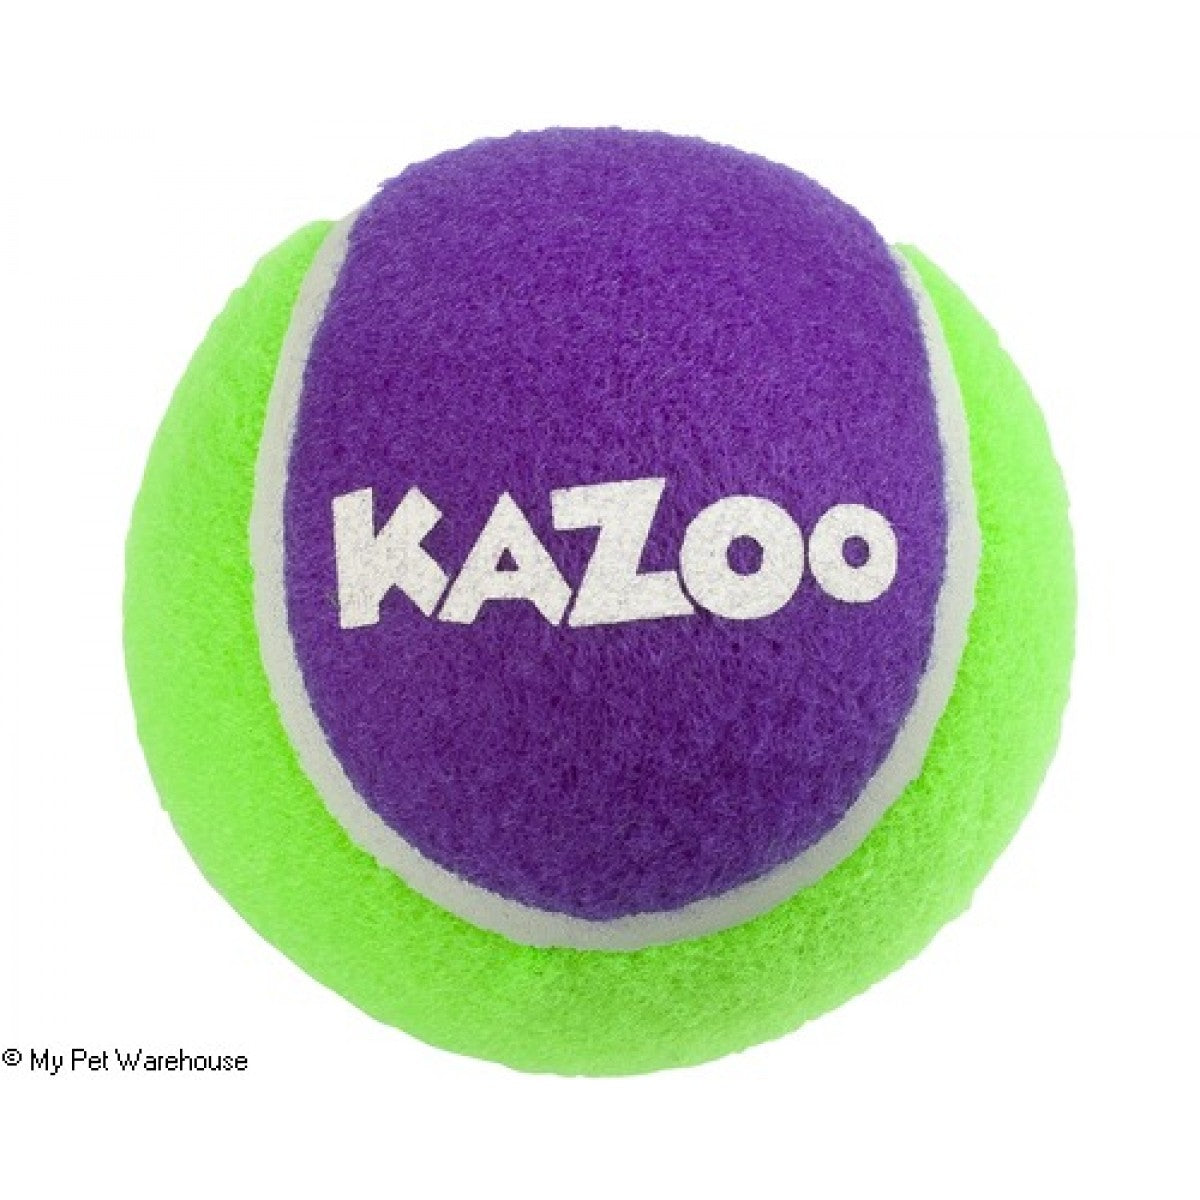 Kazoo- Sponge Tennis Ball - Large